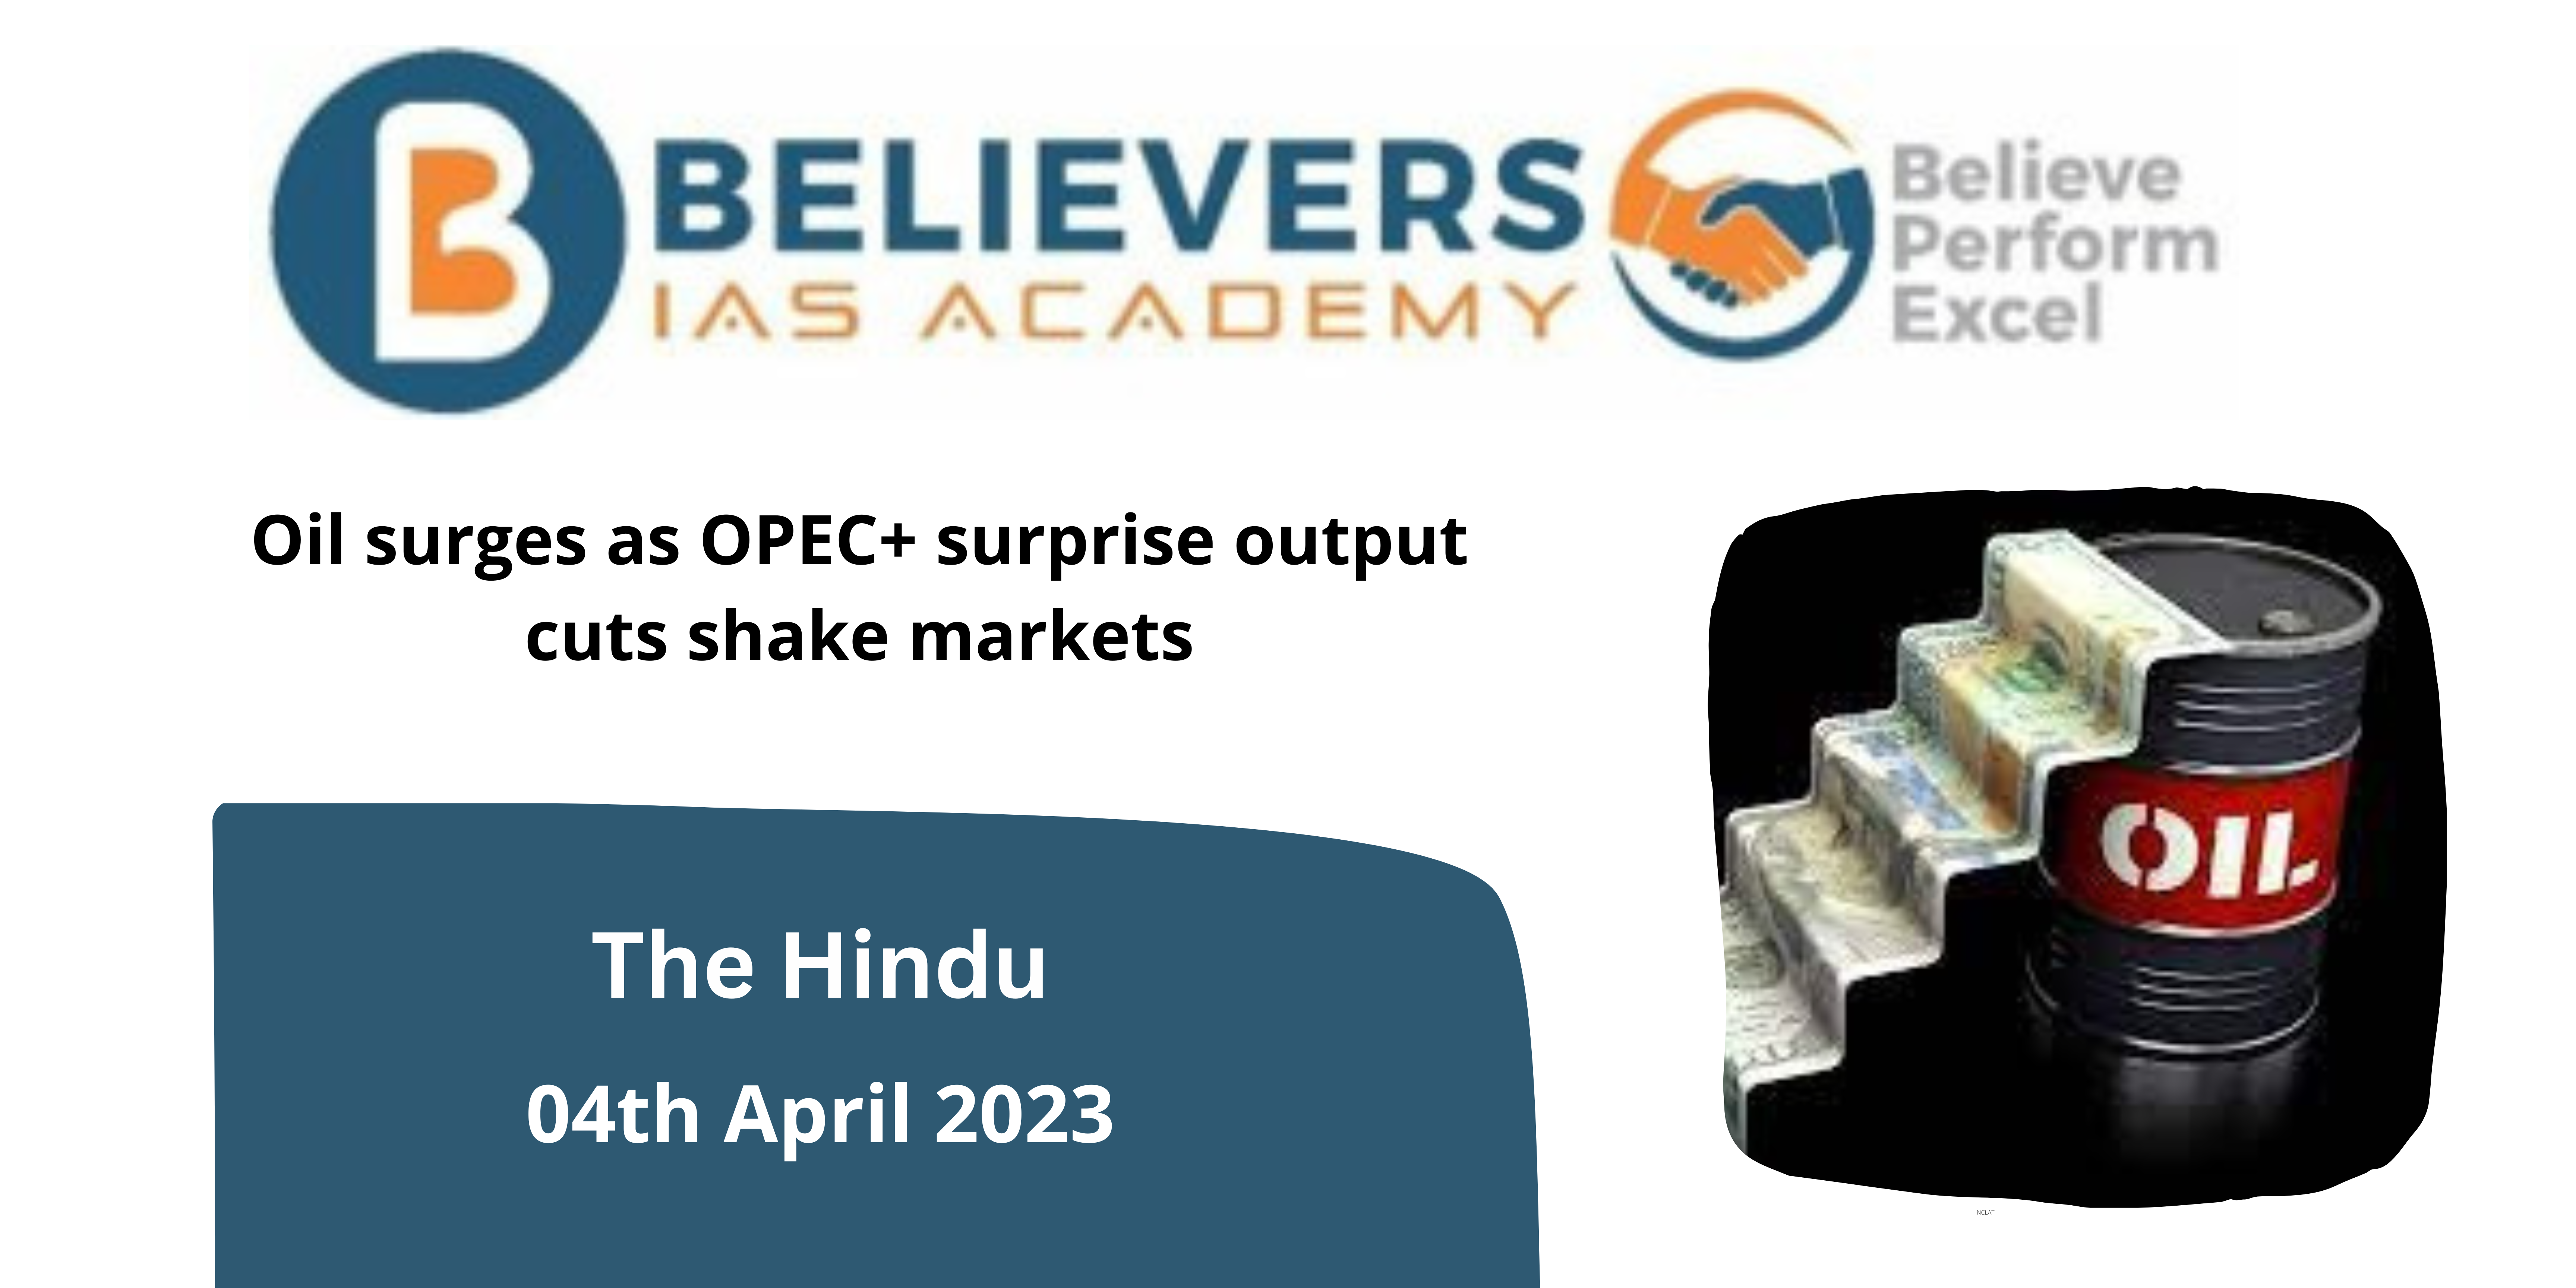 Oil surges as OPEC+ surprise output cuts shake markets